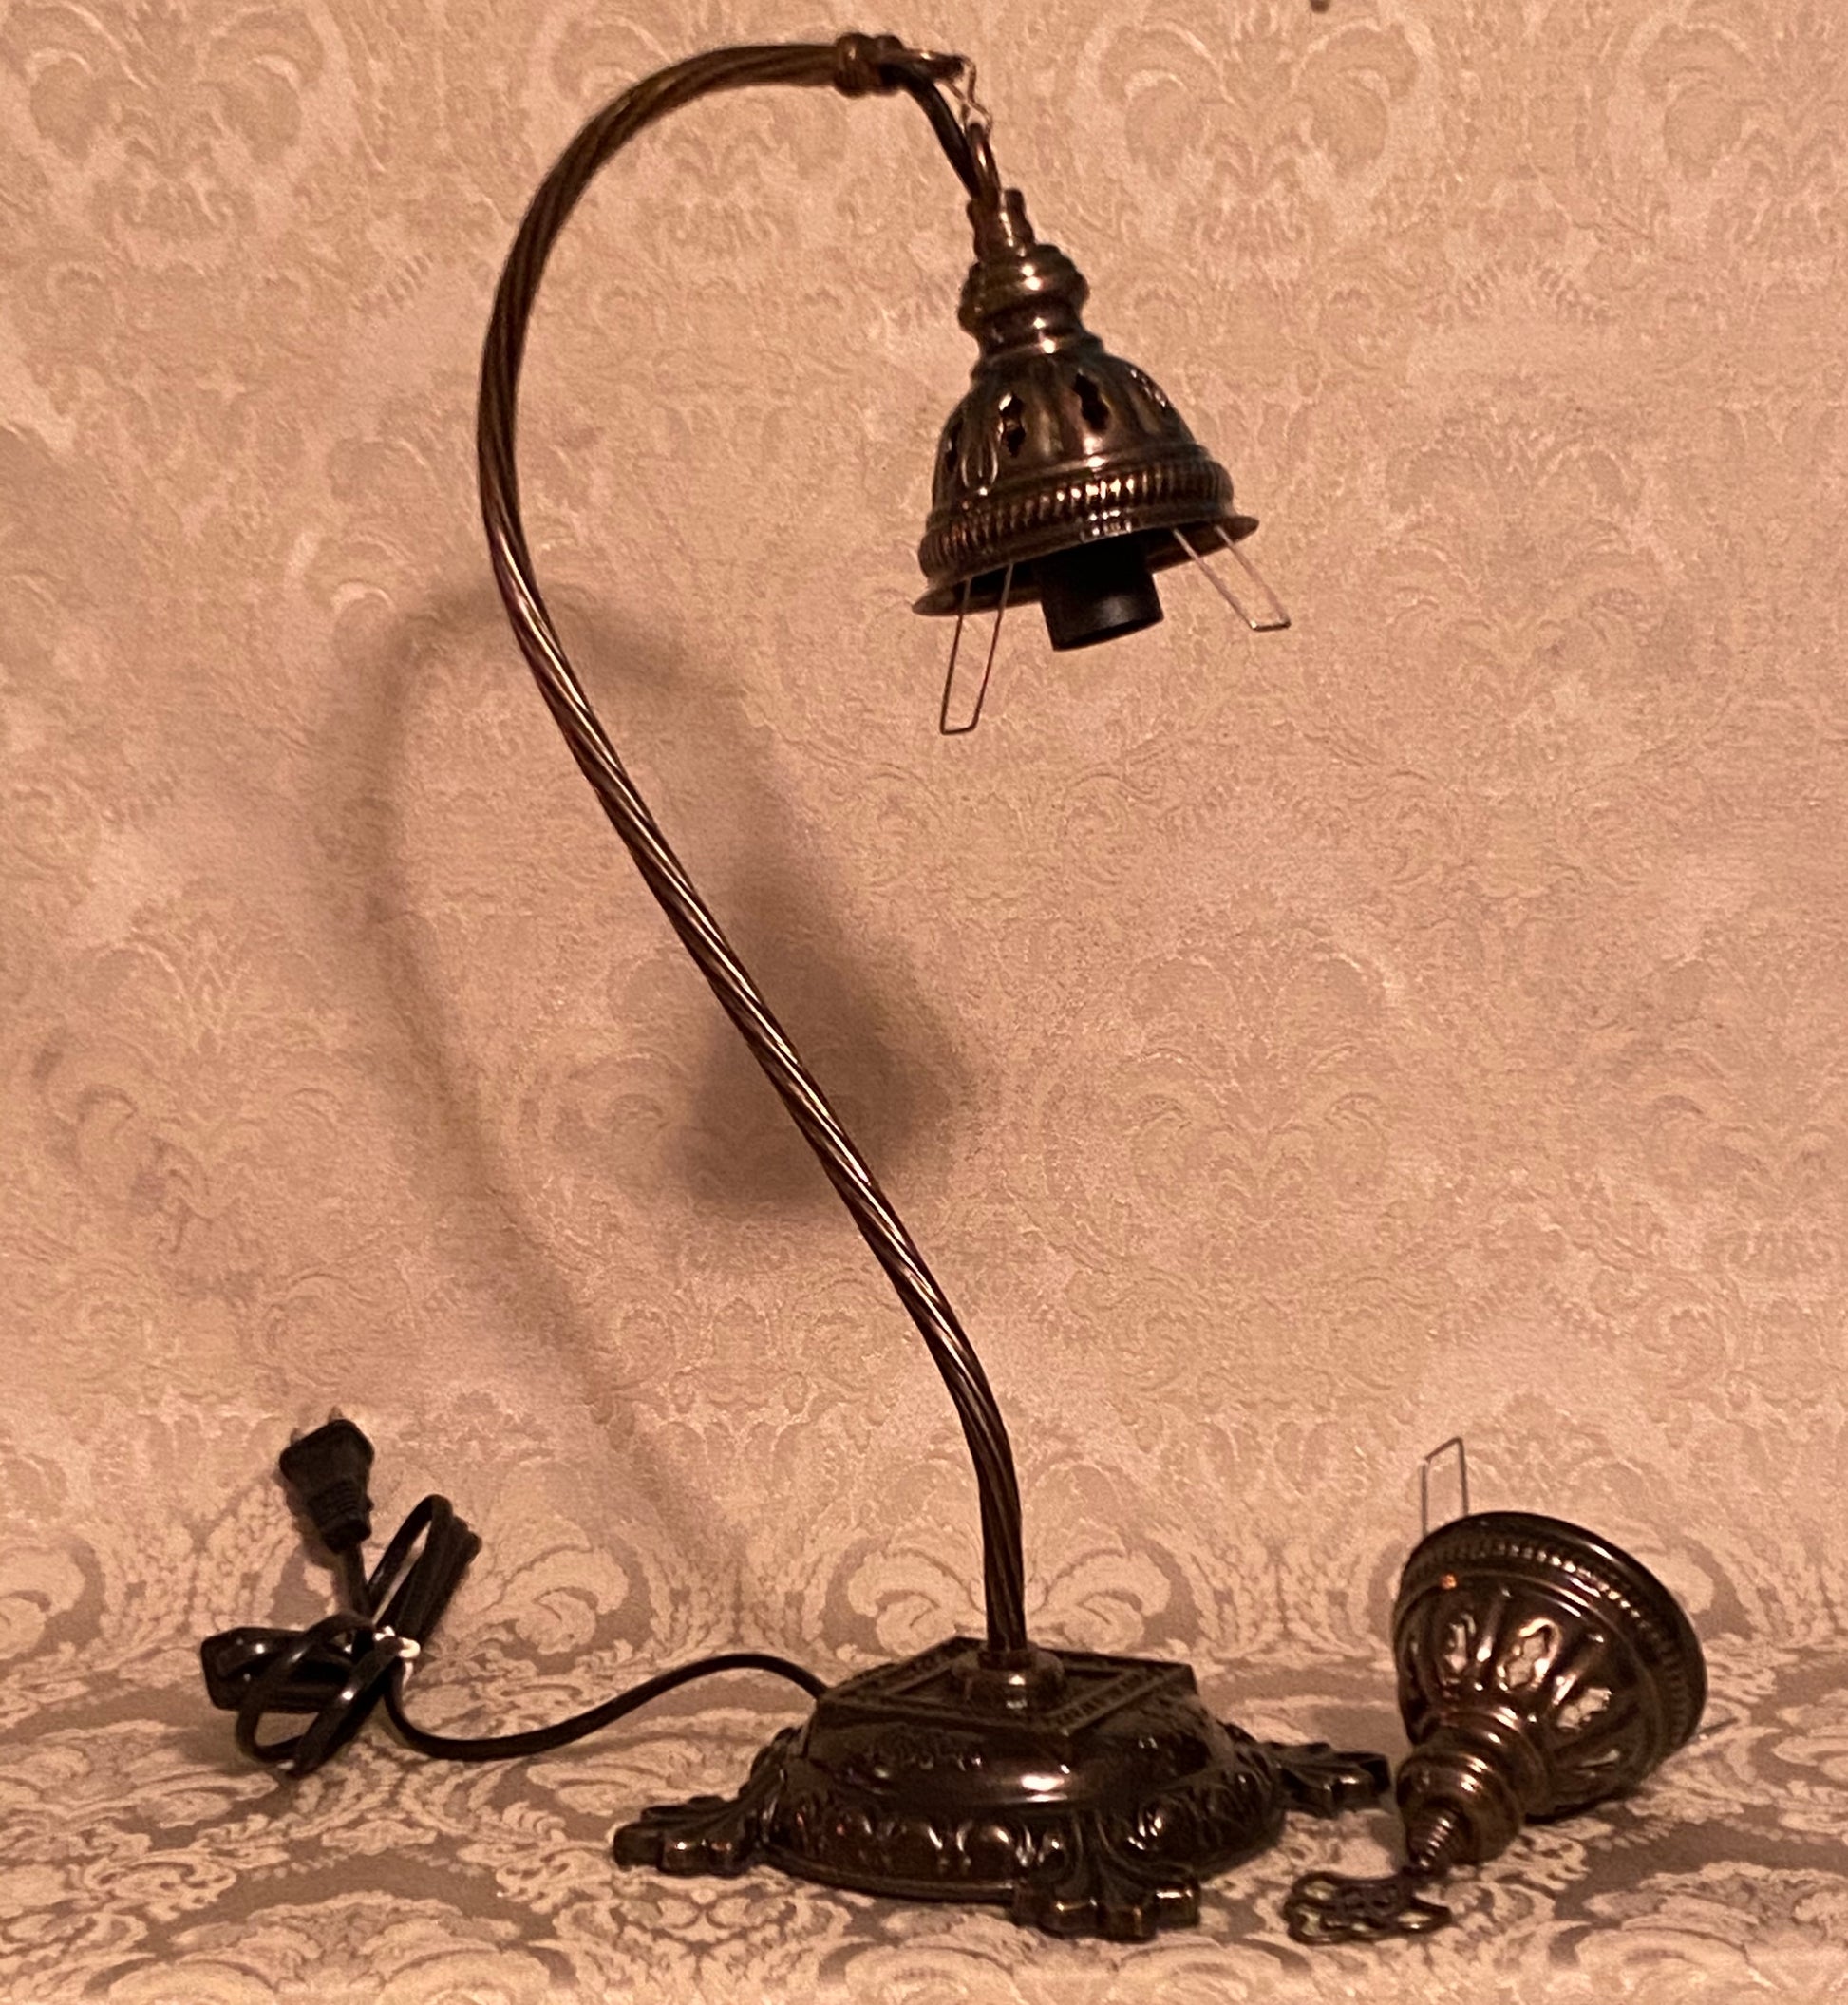 TURKISH MOSAIC TABLE LAMP CAMEL NECK DB2